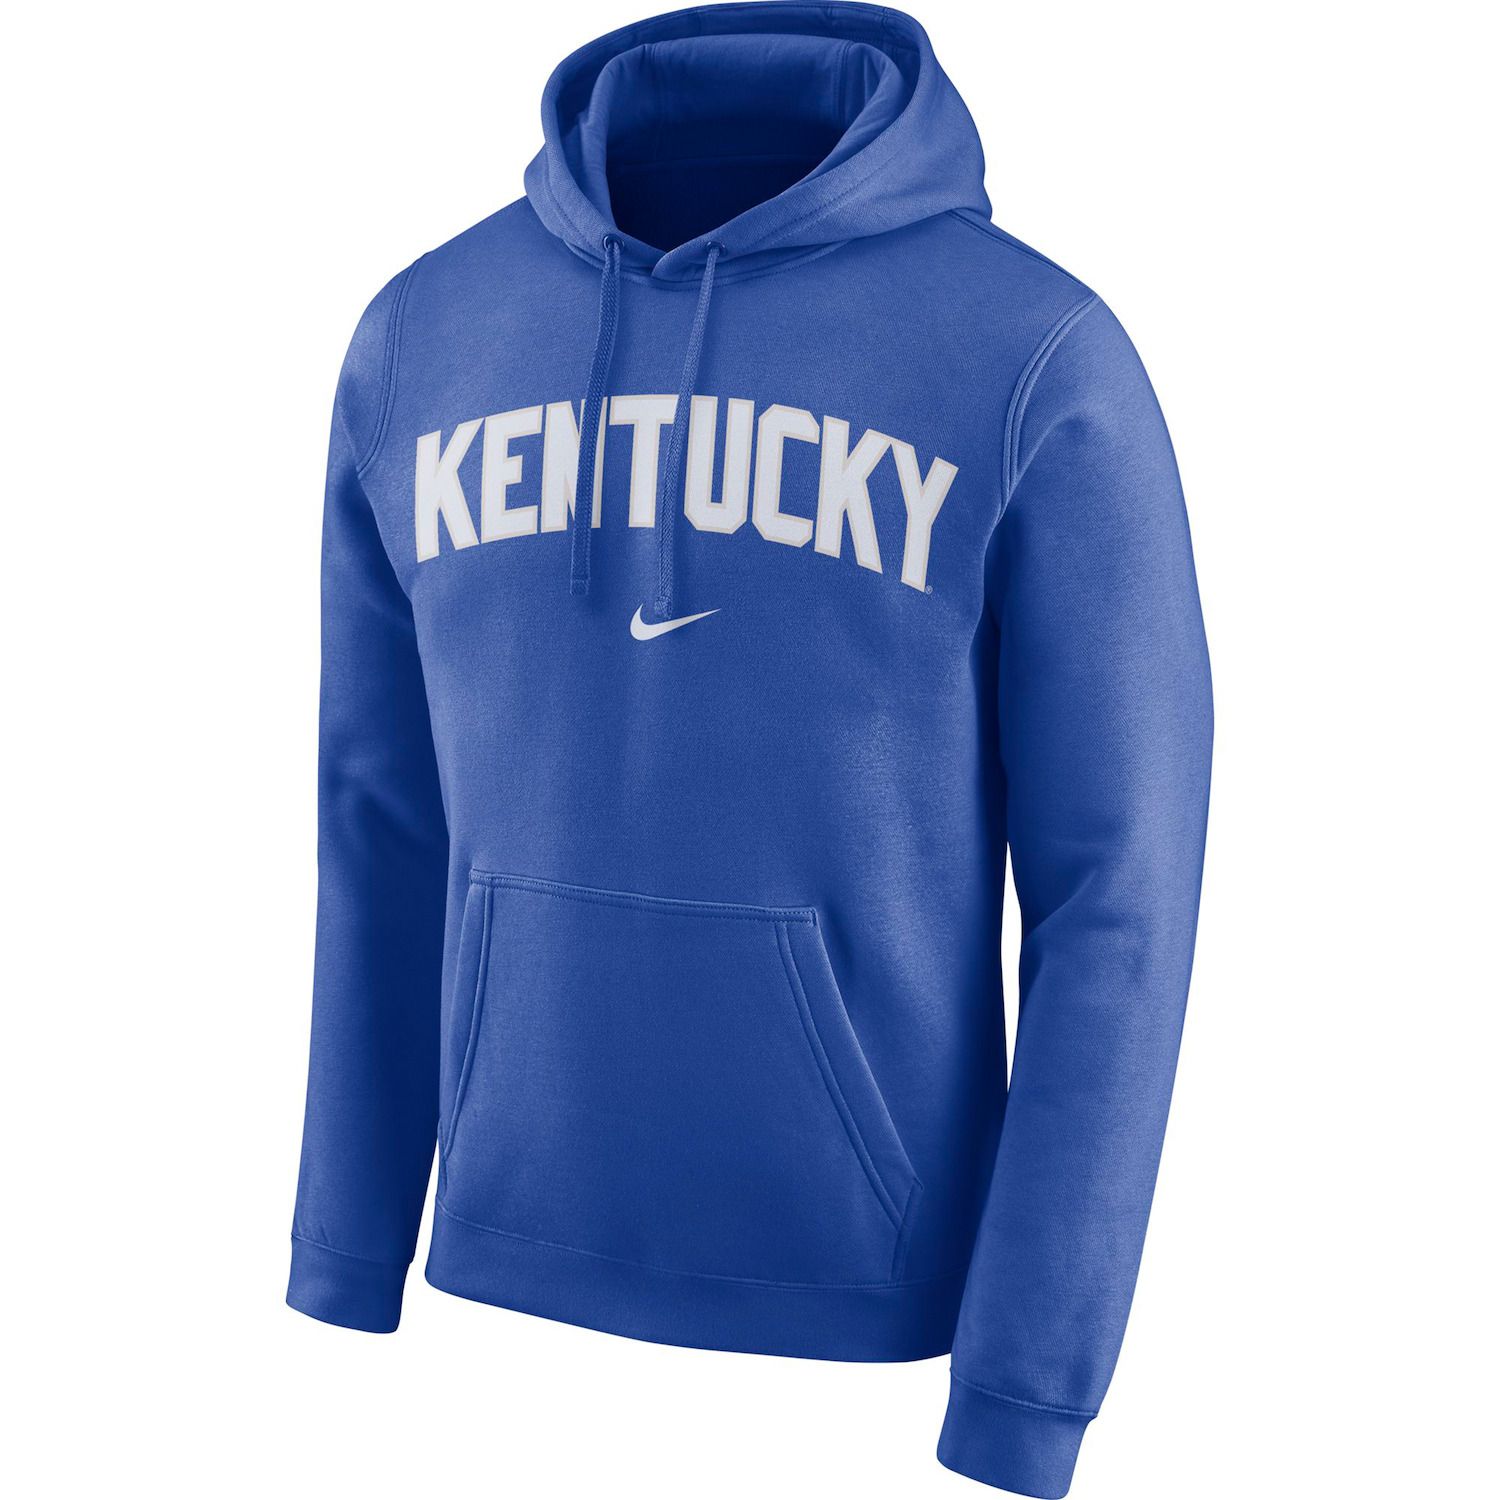 kentucky wildcats nike hoodie